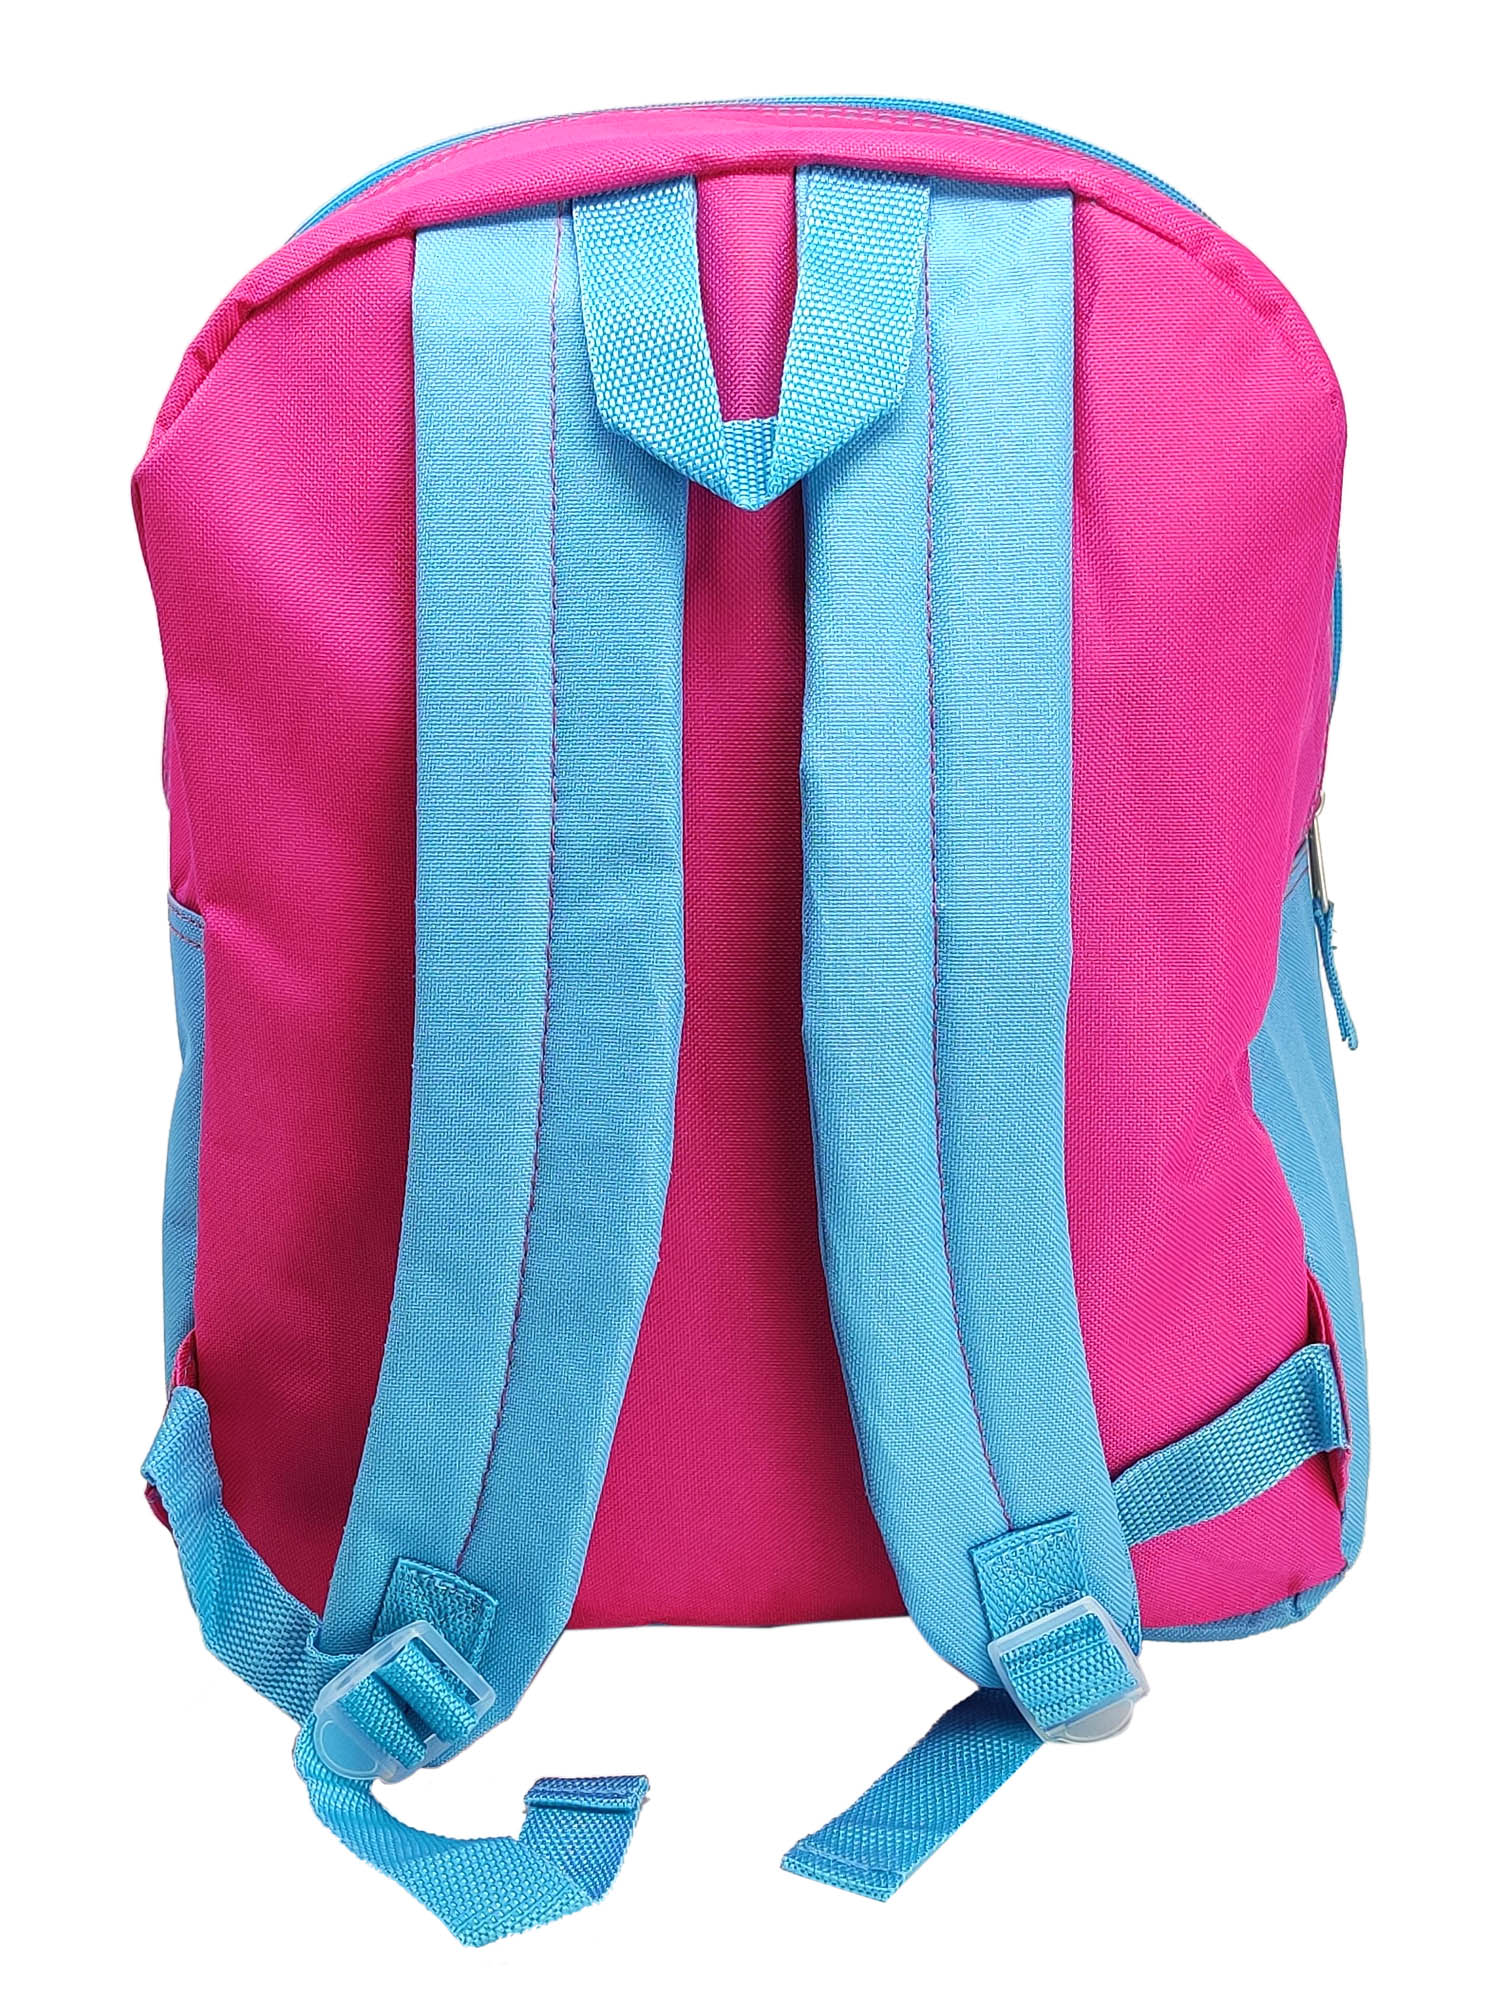 Girls JoJo Siwa Backpack 15" Glitter Please! Rainbow Hearts Pink Bow - image 3 of 3